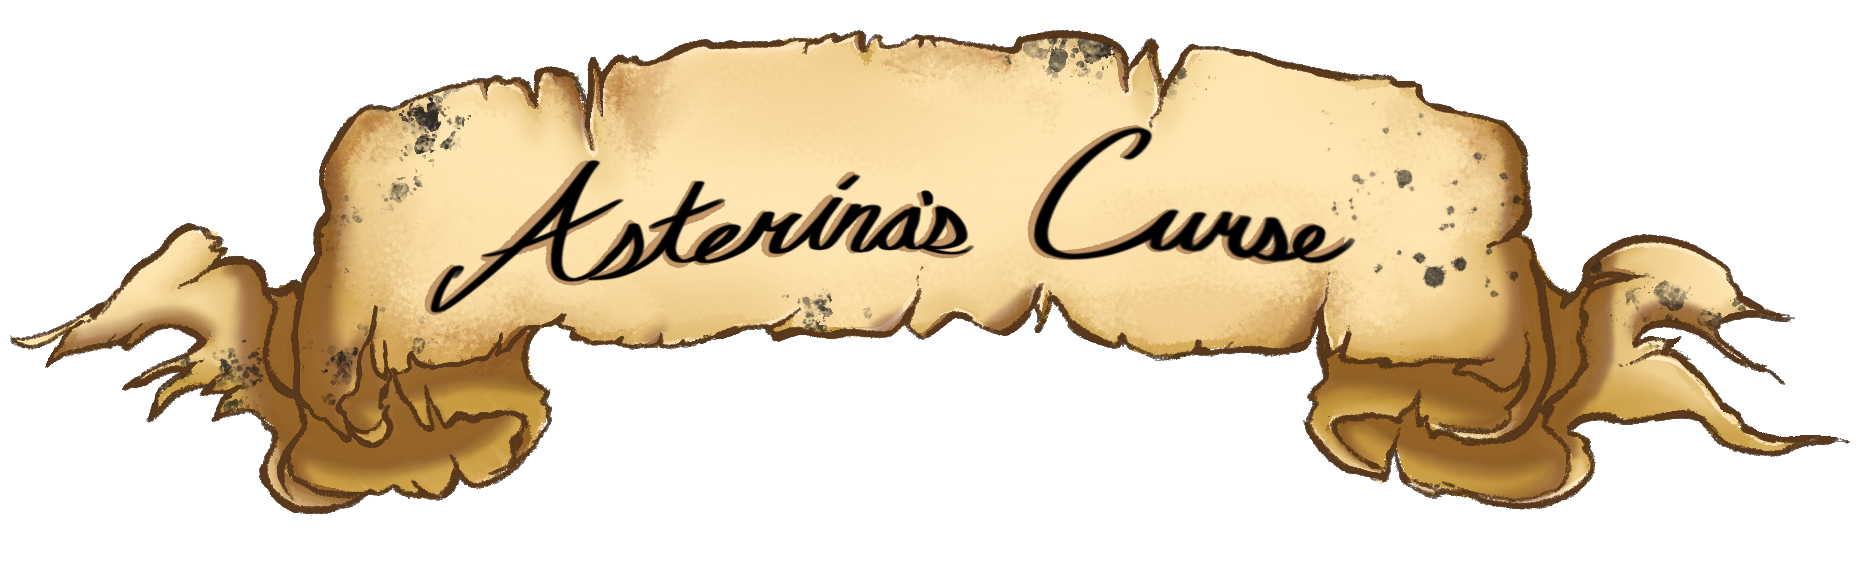 Asterina's Curse Demo